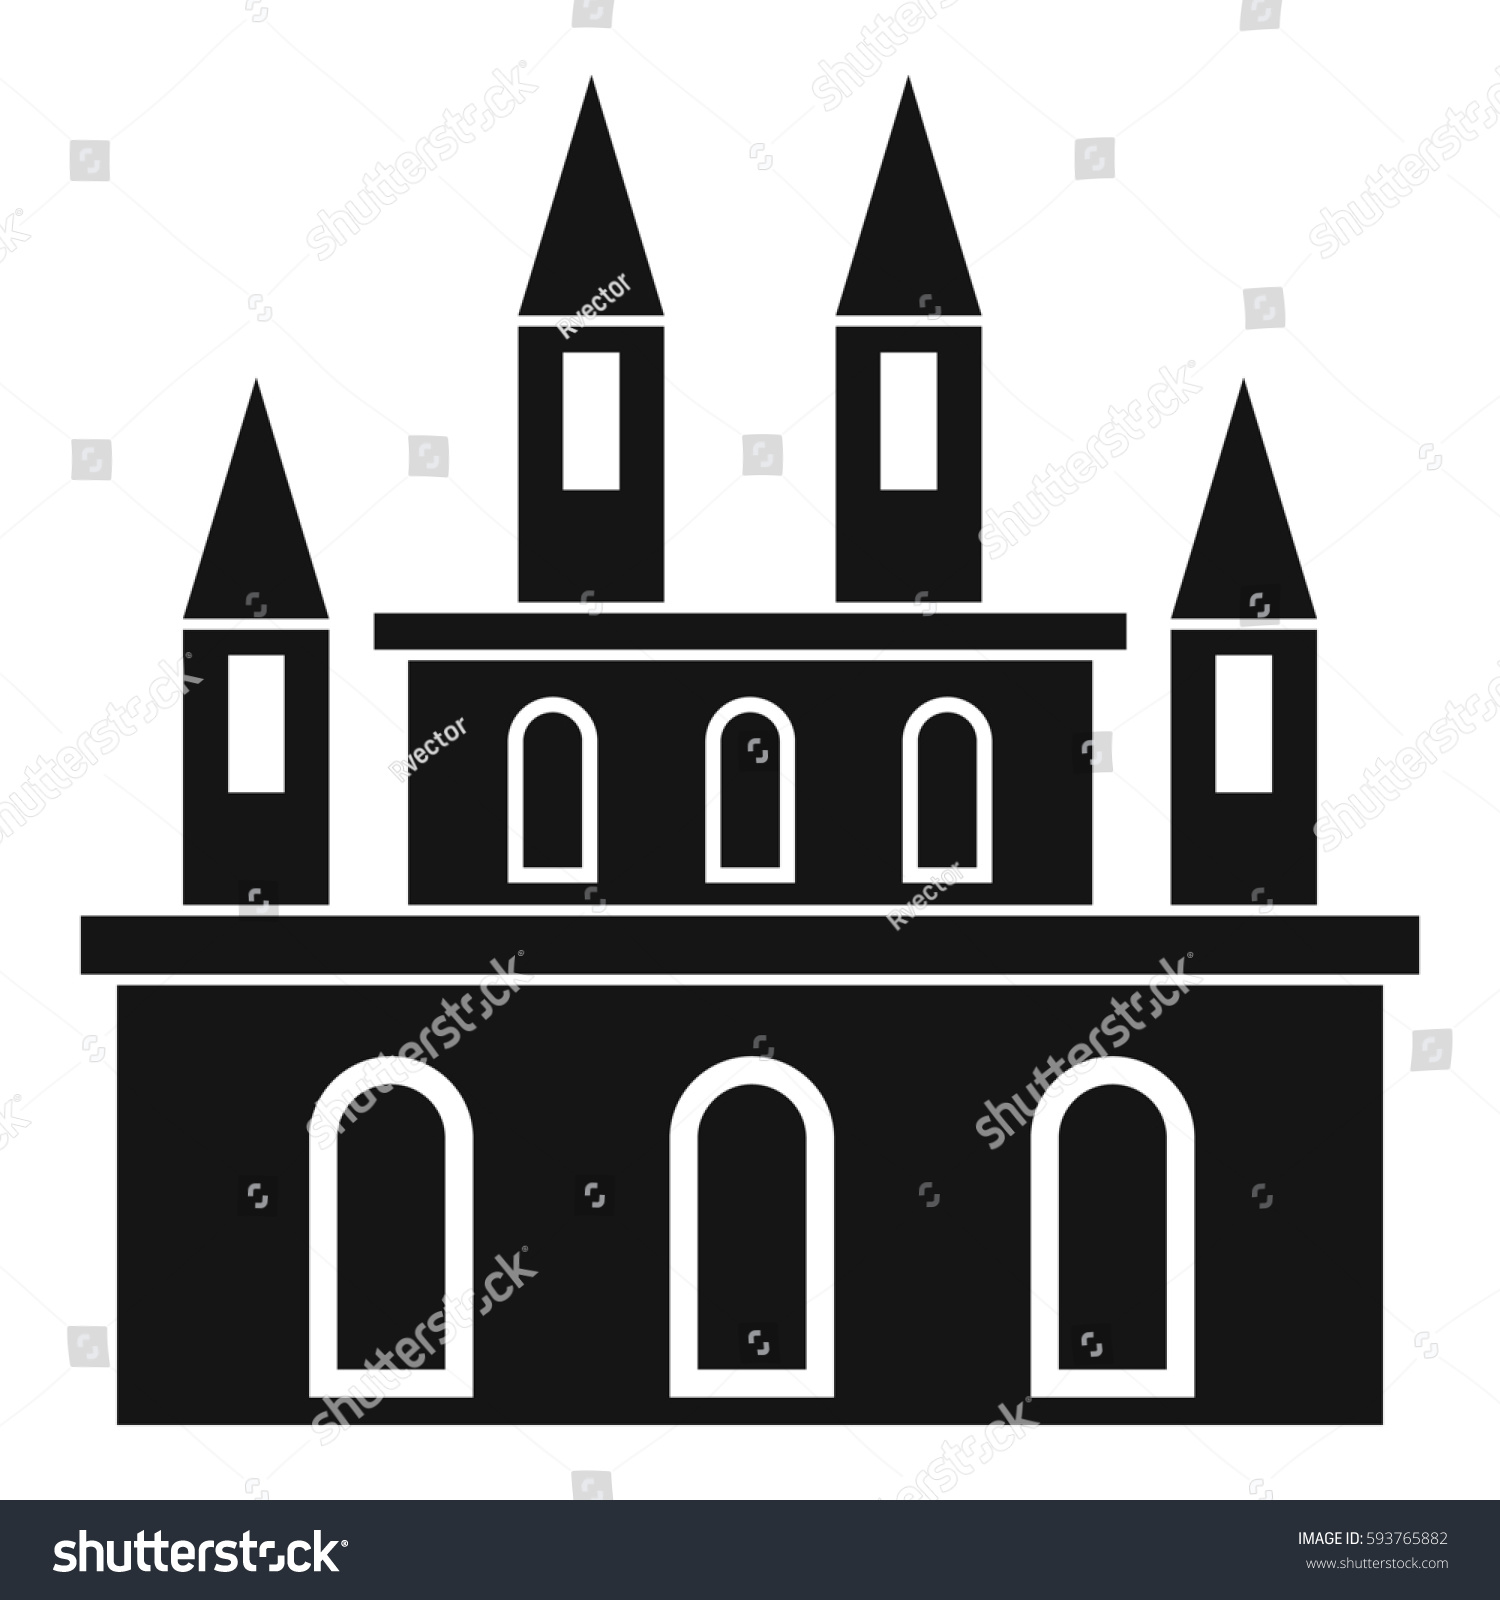 castle-icon-set-vector-illustration-modern-icons-white-background 